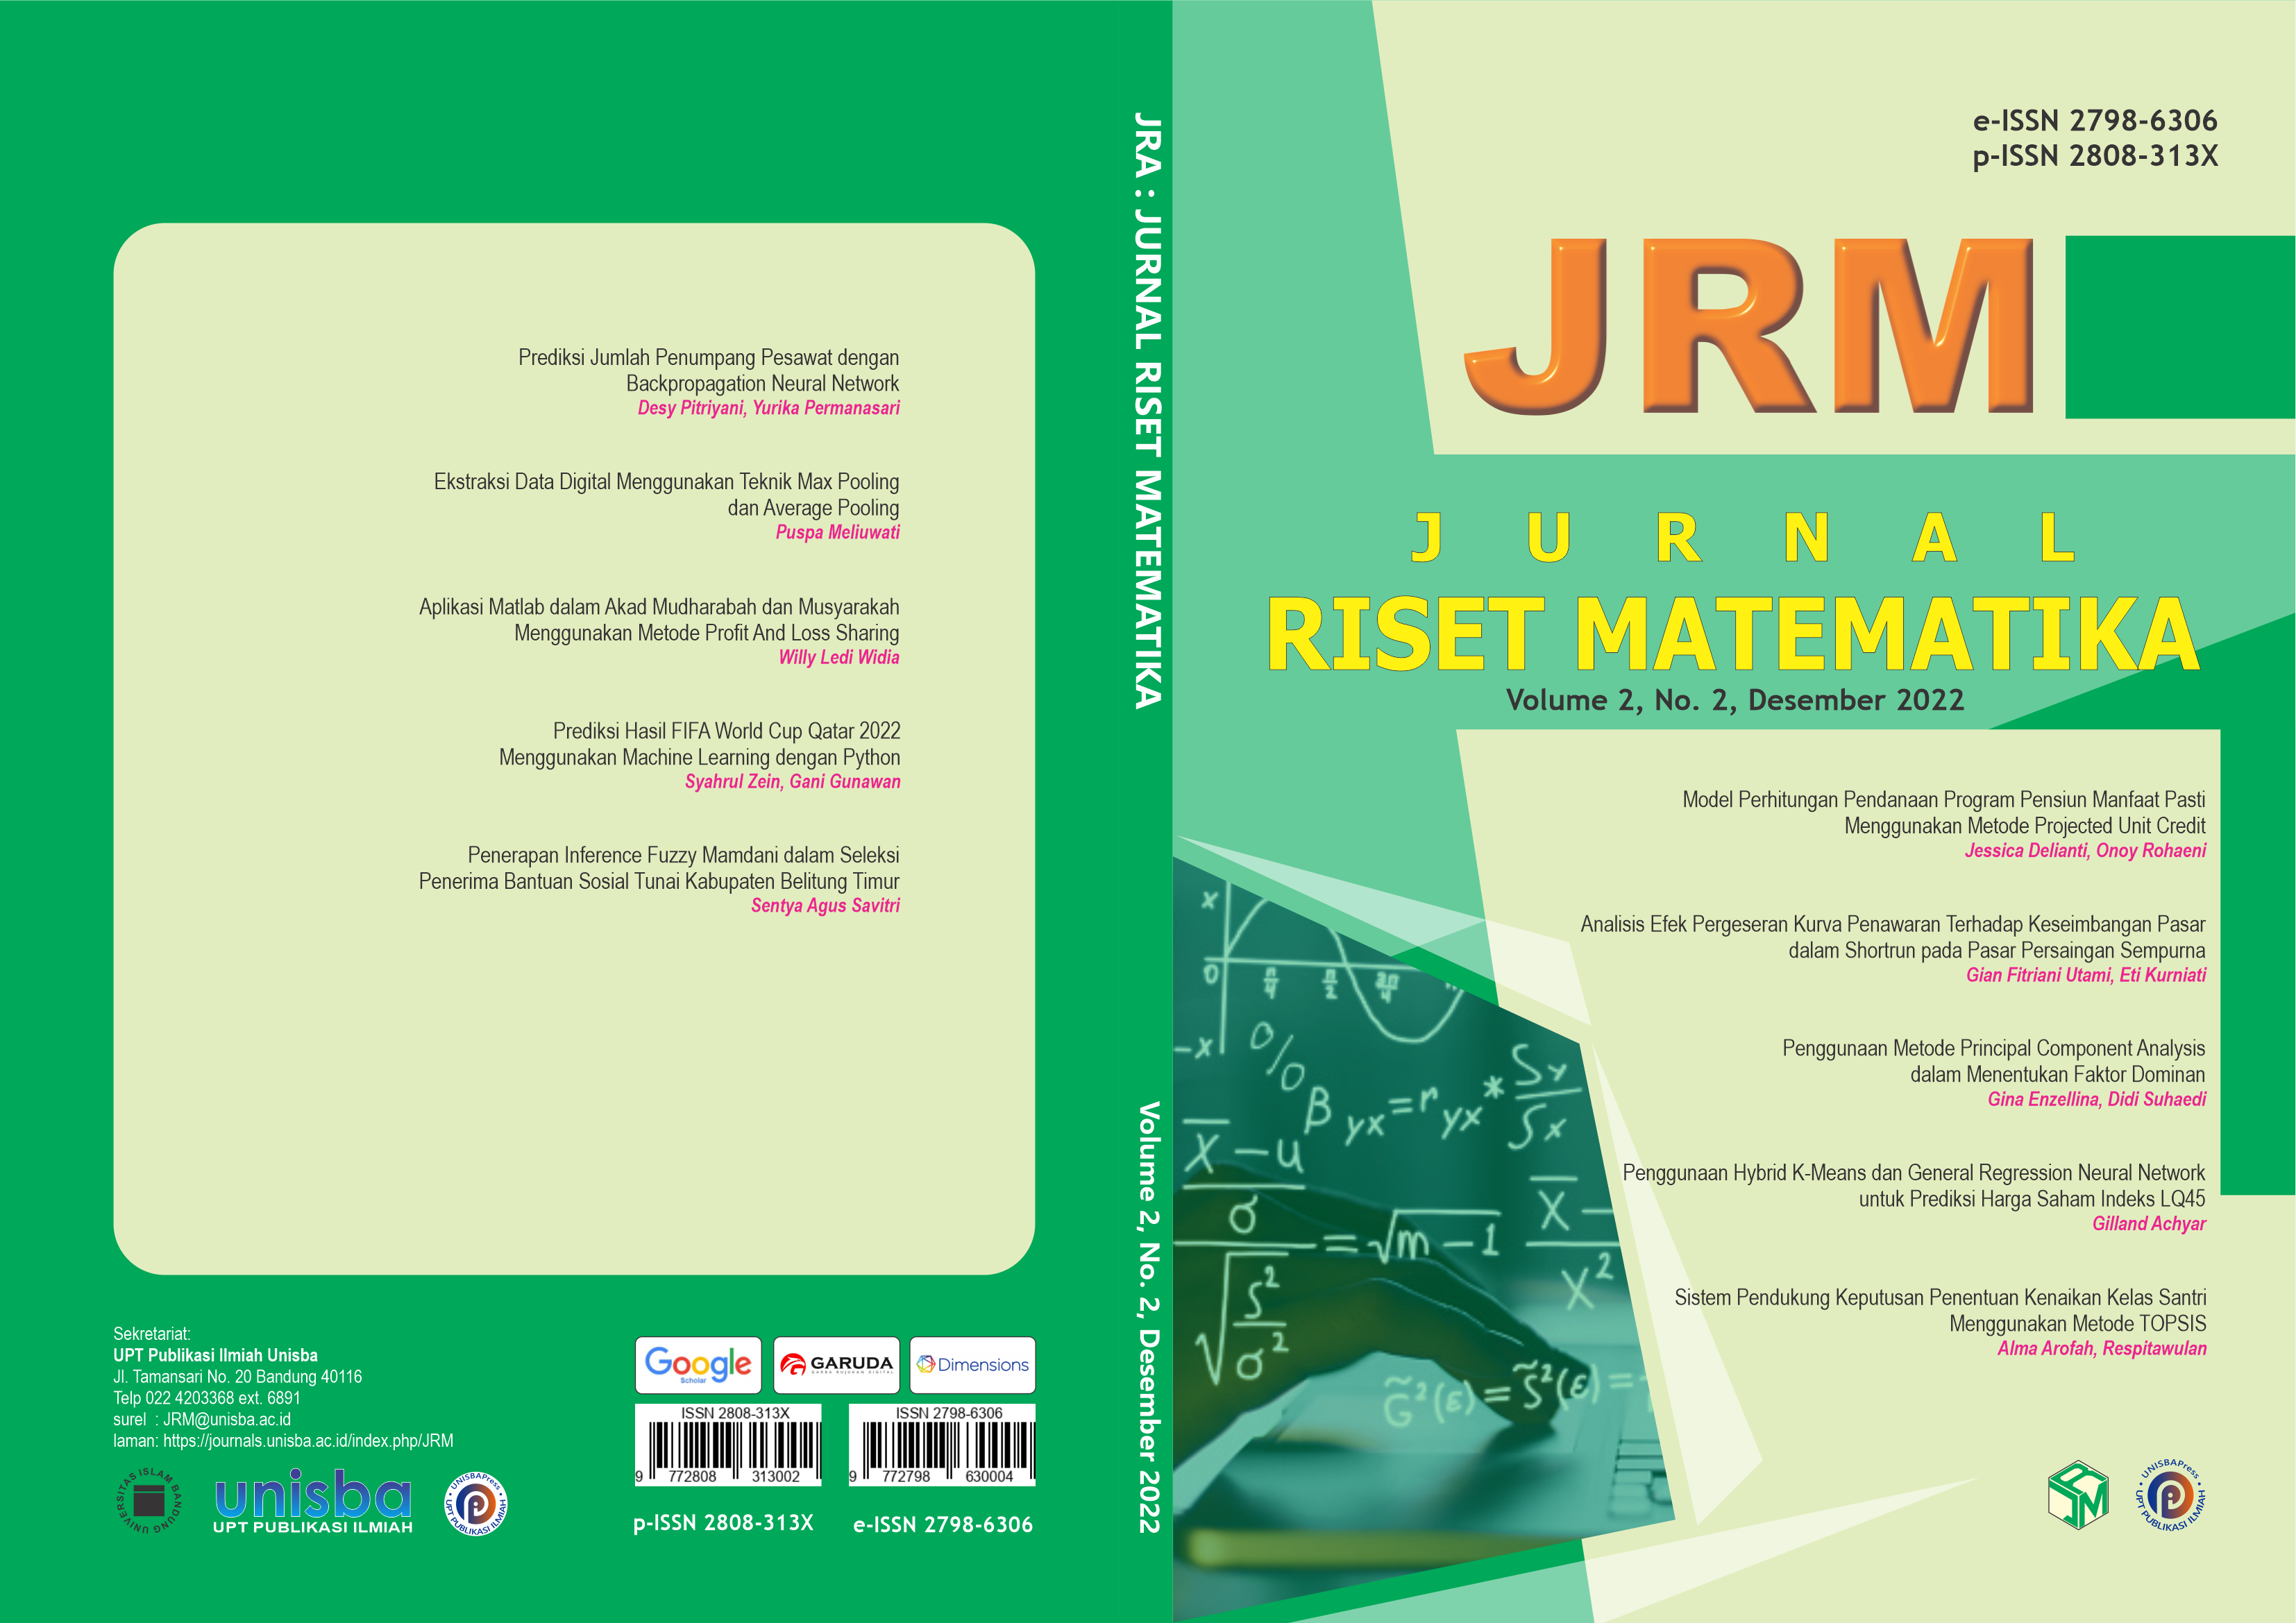 					View Volume 2, No. 2, Desember 2022, Jurnal Riset Matematika (JRM)
				